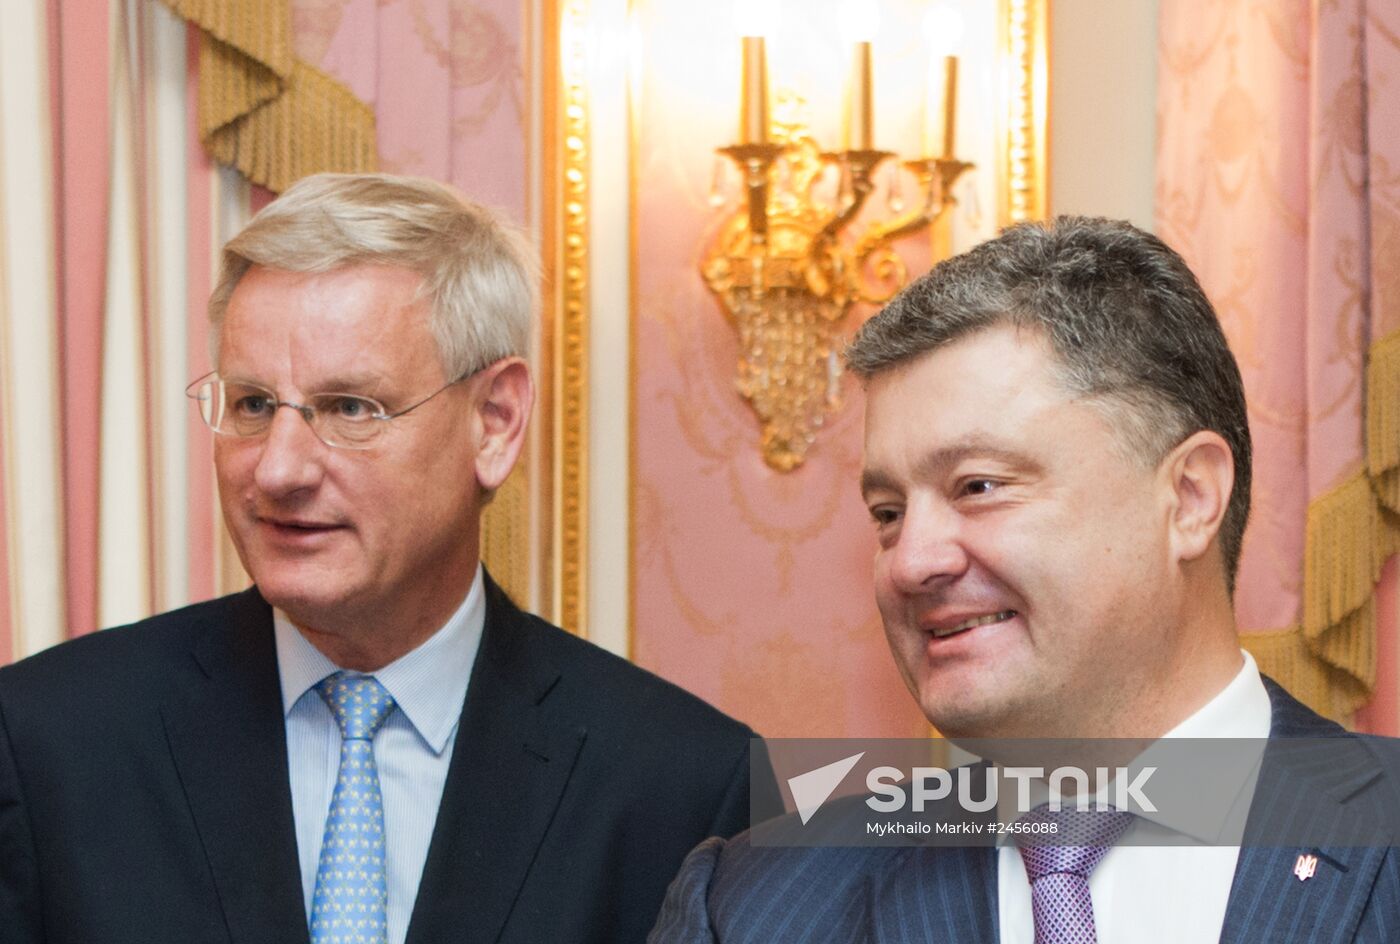 Ukrainian President Petro Poroshenko meets with Swedish Foreign Minister Carl Bildt